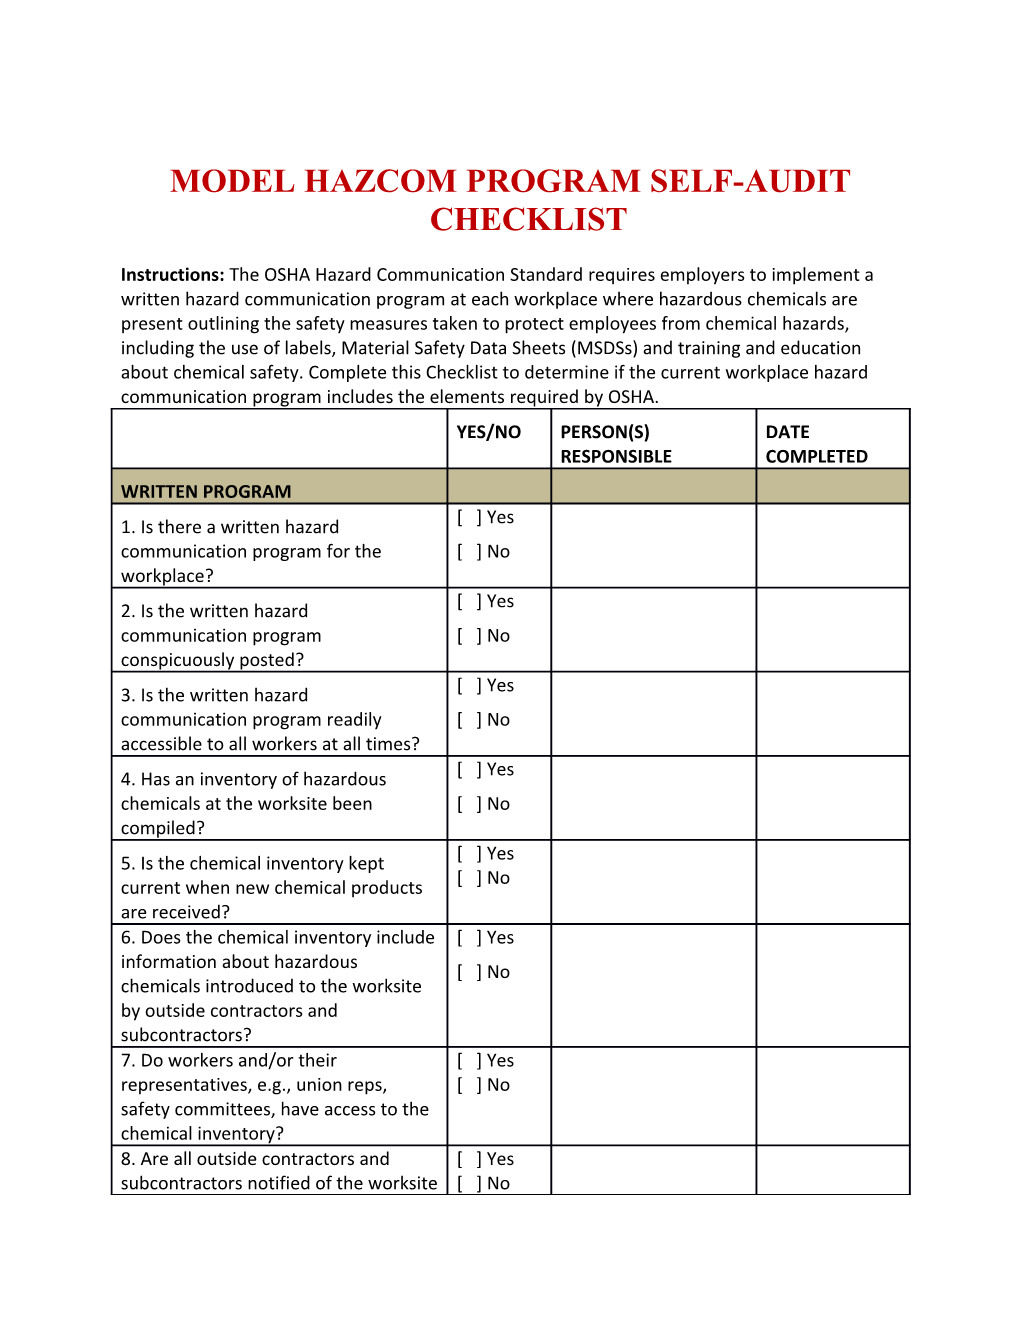 Model Hazcom Program Self-Audit Checklist